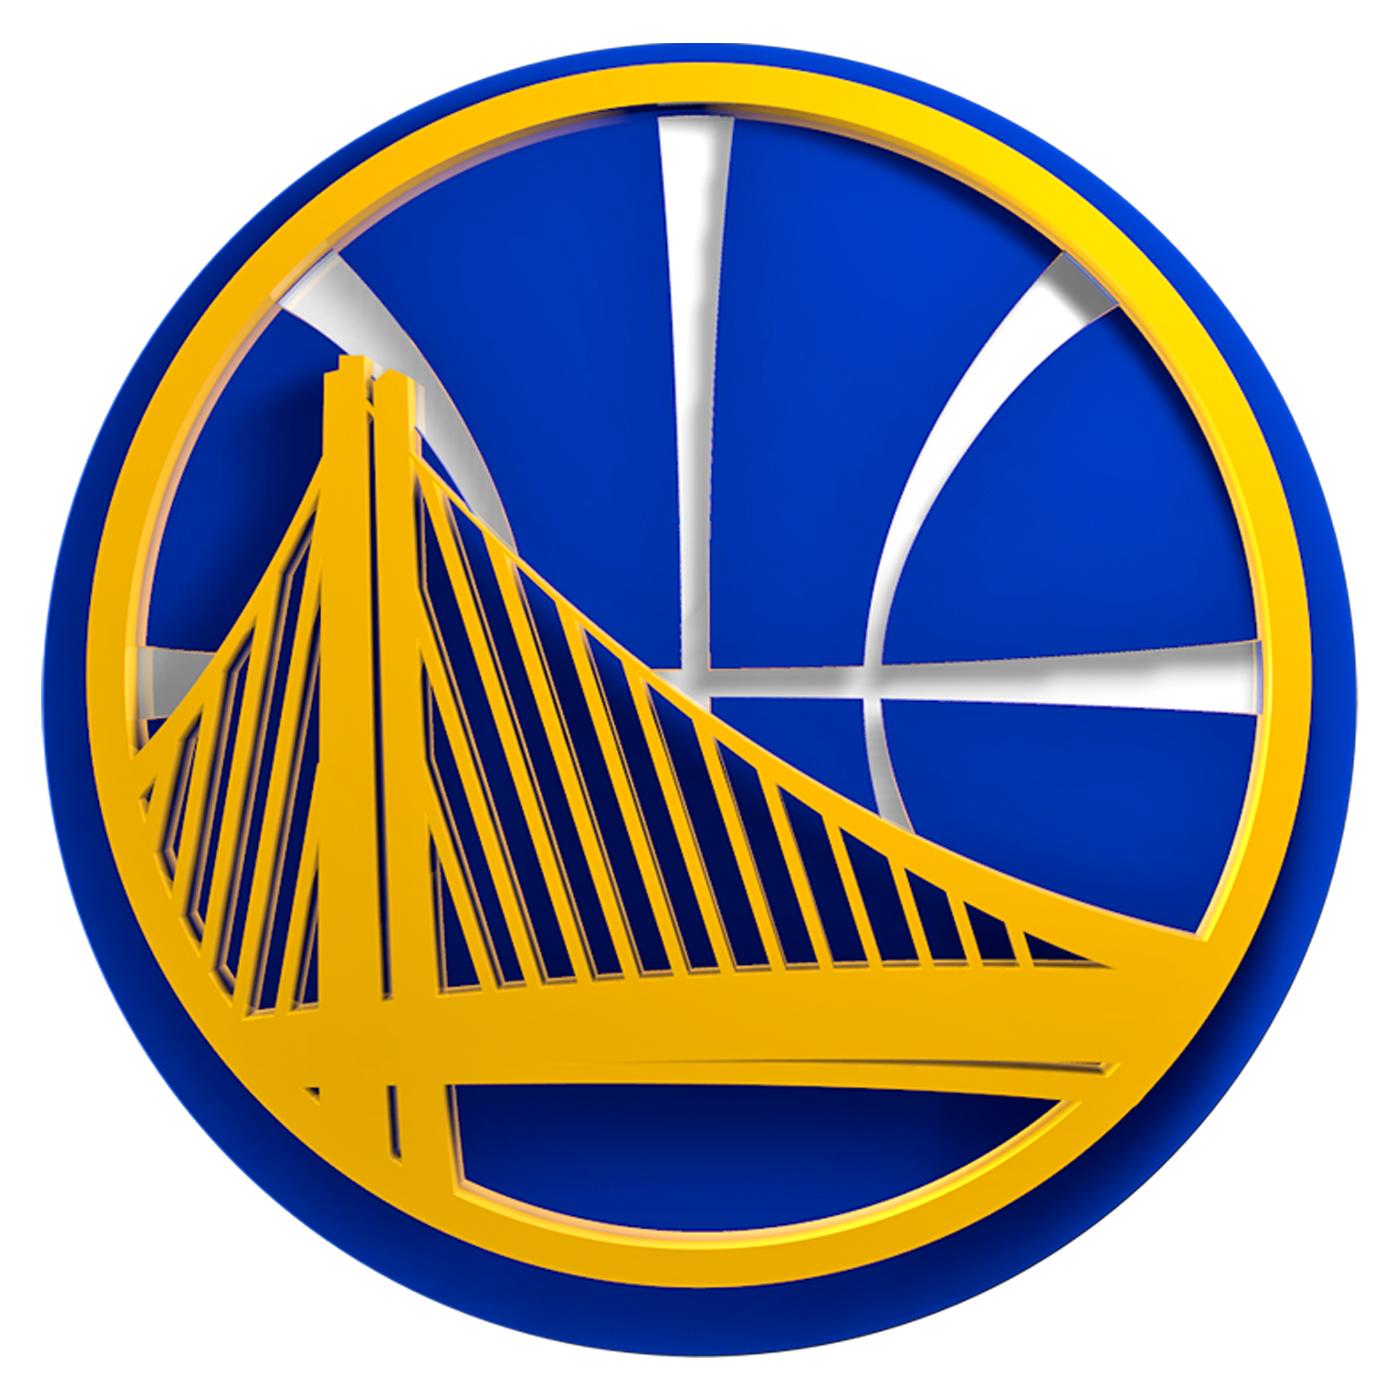 Golden State Warriors Logo - Golden State Warriors. The Official Site of the Golden State Warriors